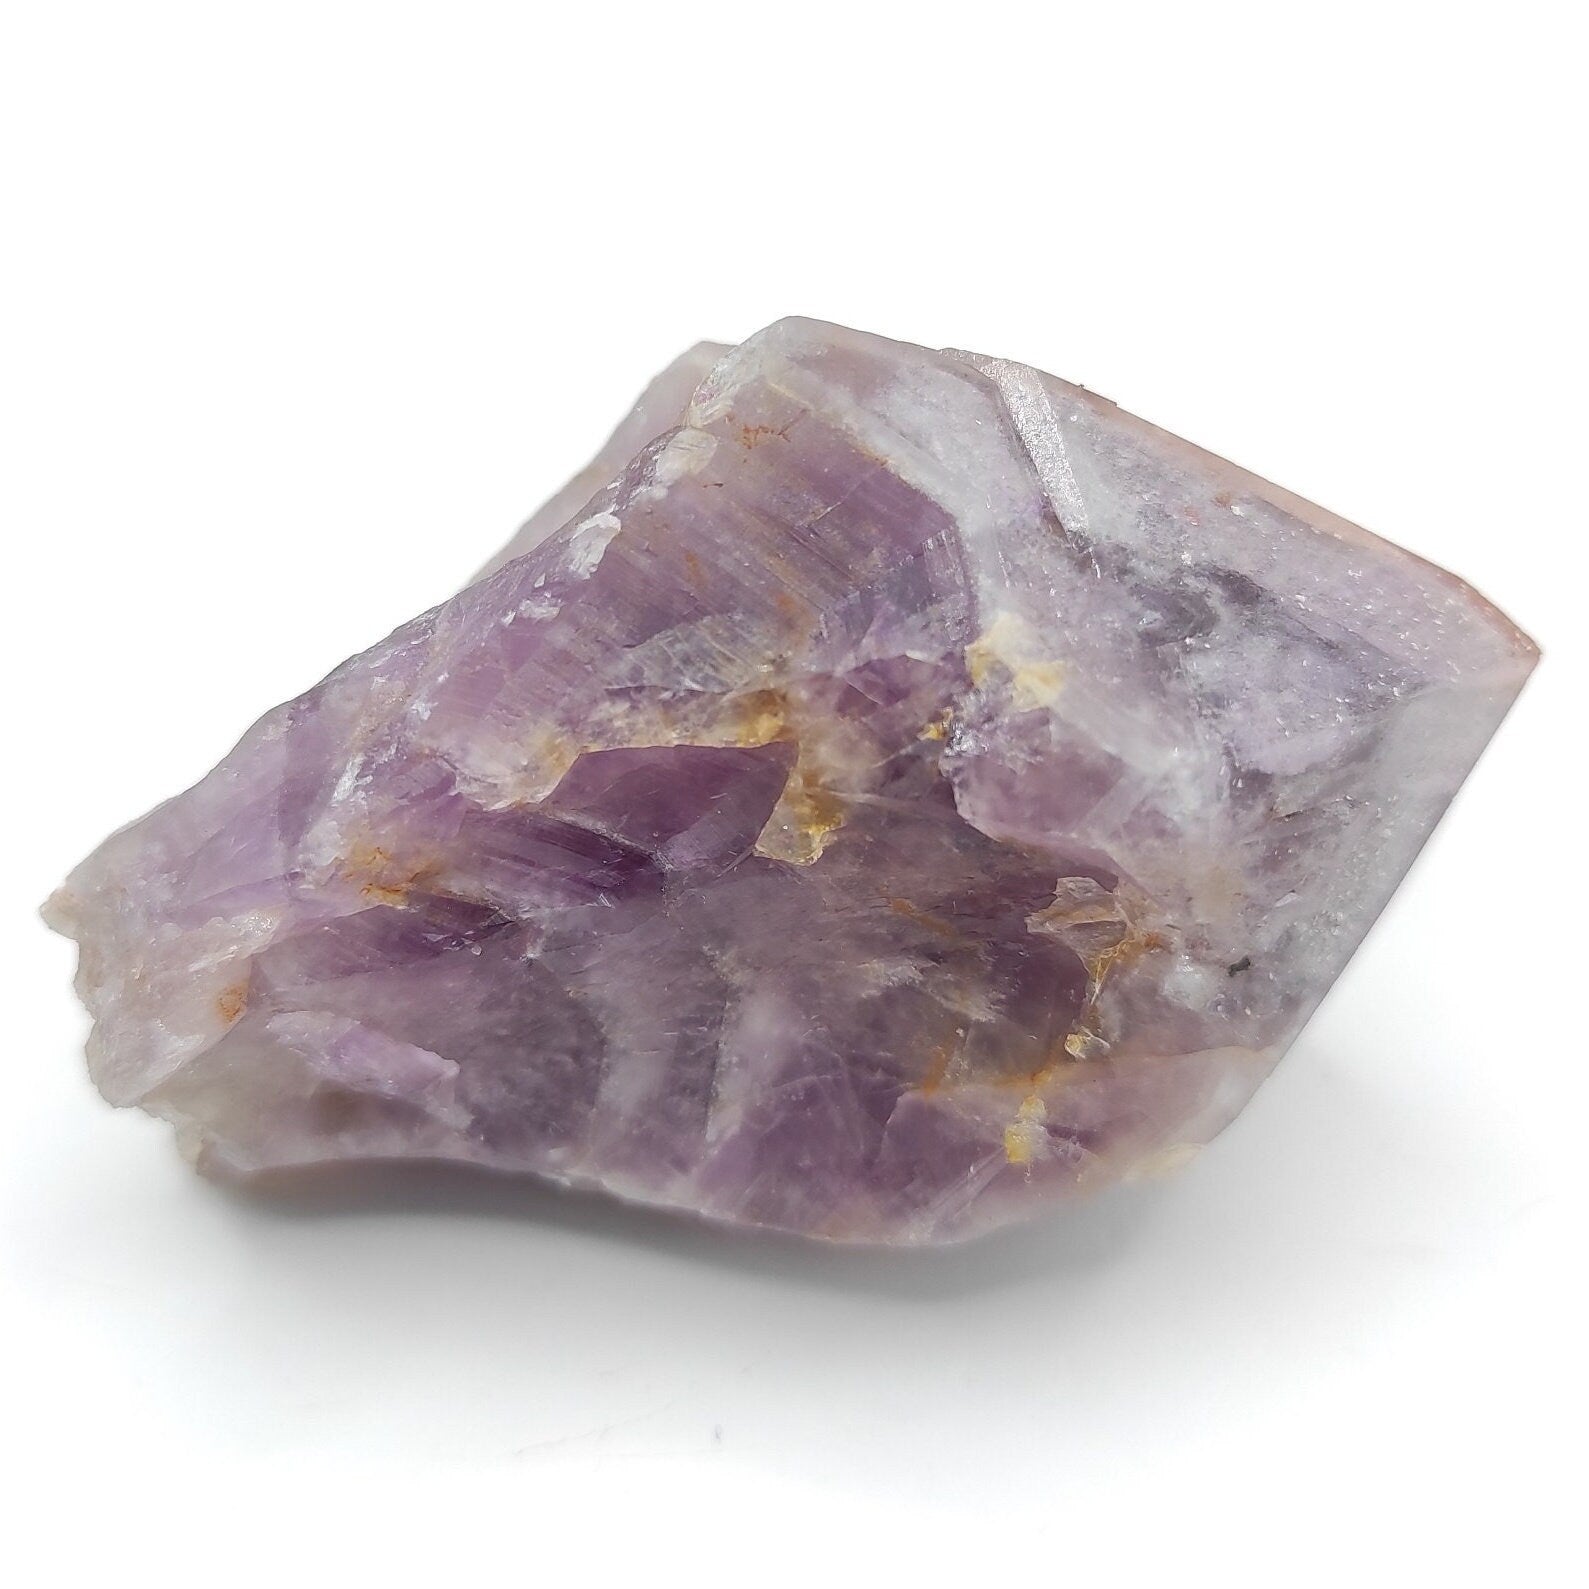 60g Thunder Bay Amethyst - Hematite Coated Amethyst - Canadian Amethyst Crystal - Amethyst Thunder Bay - Red Amethyst - Mineral Specimen